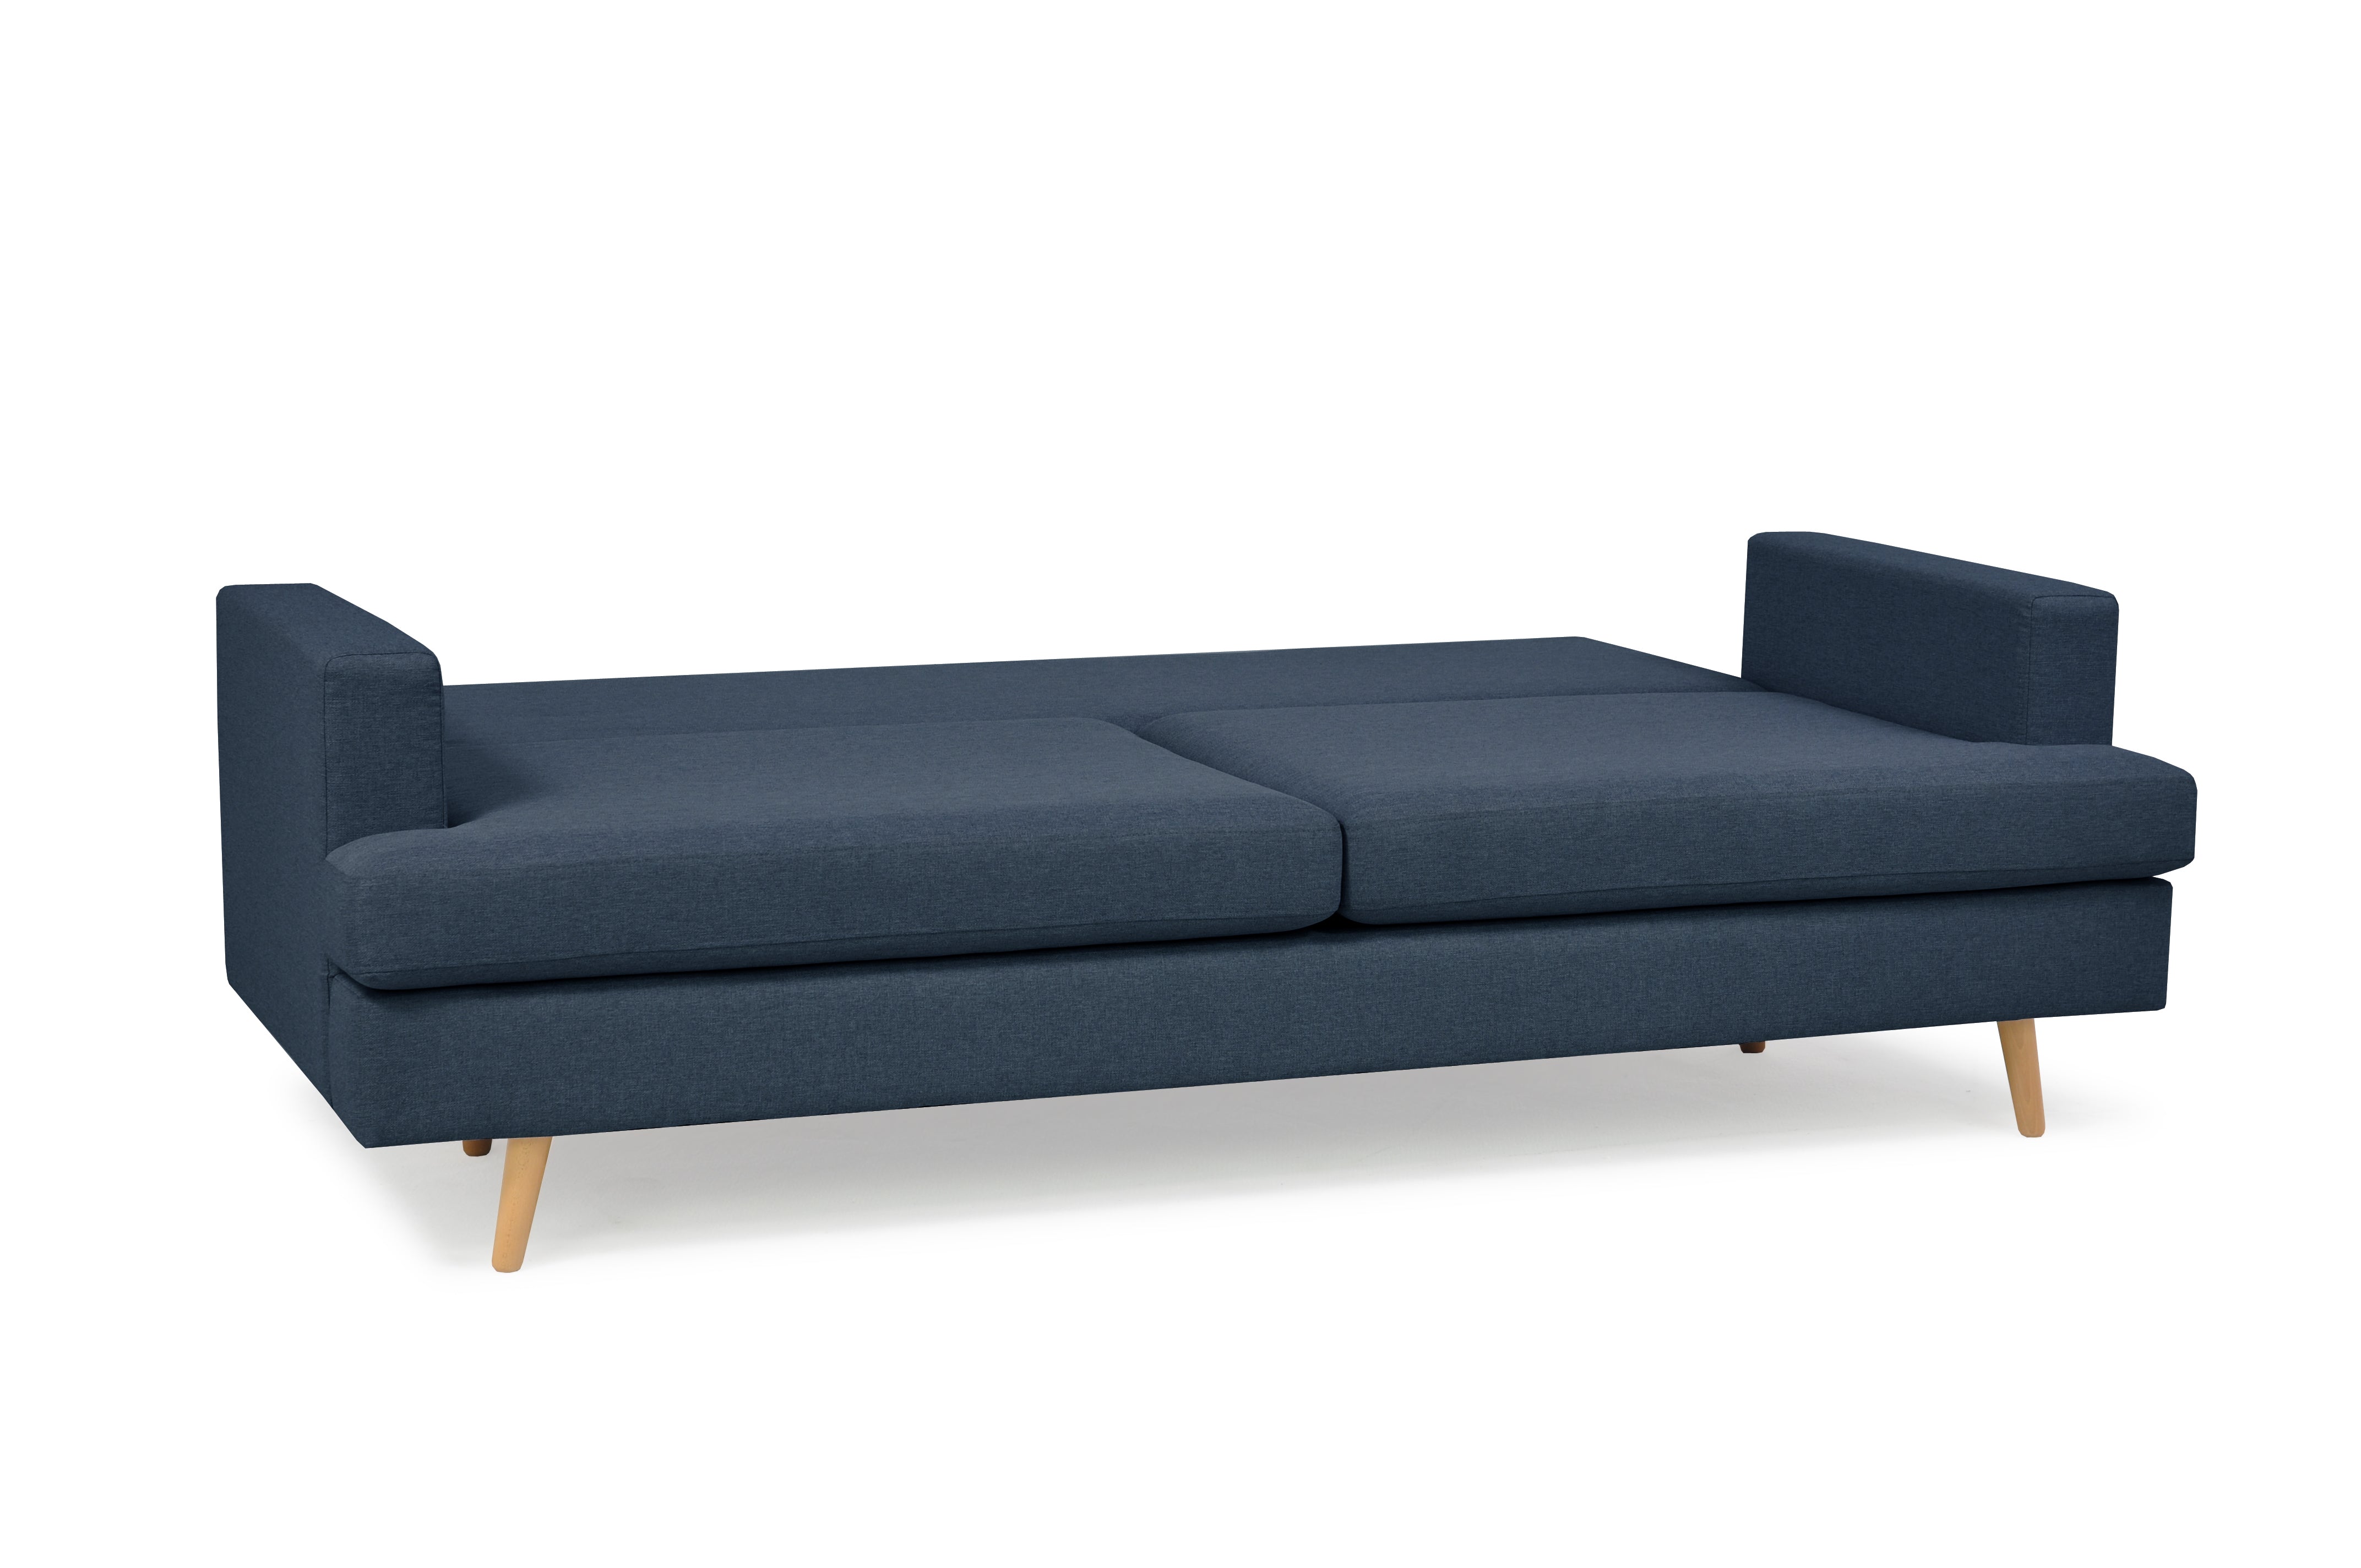 3 seater sofa upholstered in blue fabric, wooden legs, for living room, dining room, bedroom office - NOVEL 3 CV